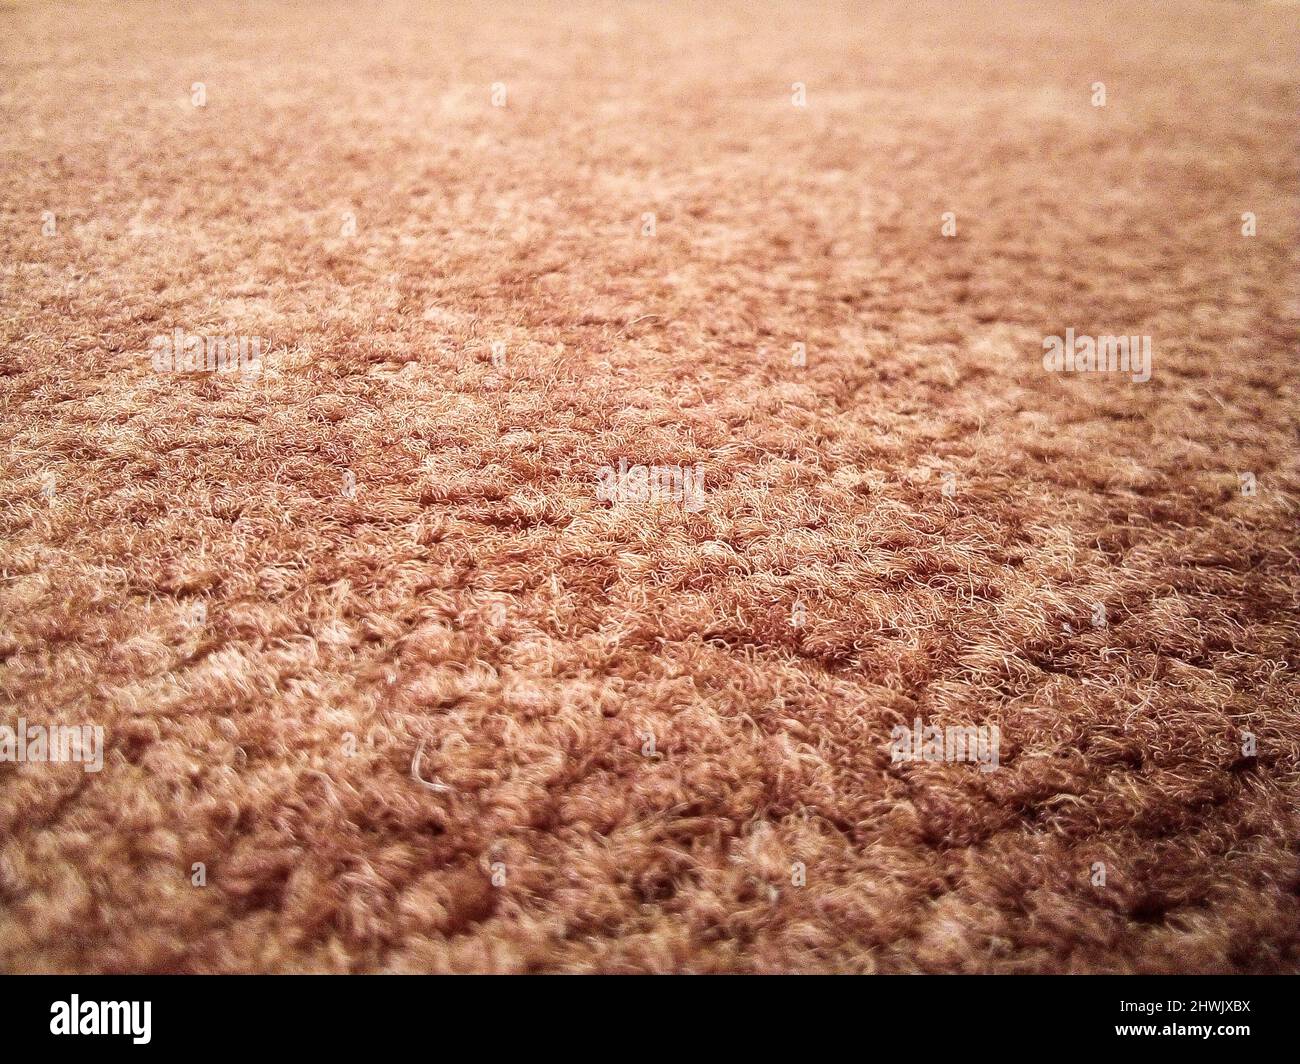 Texture of carpet fabric on the floor Stock Photo